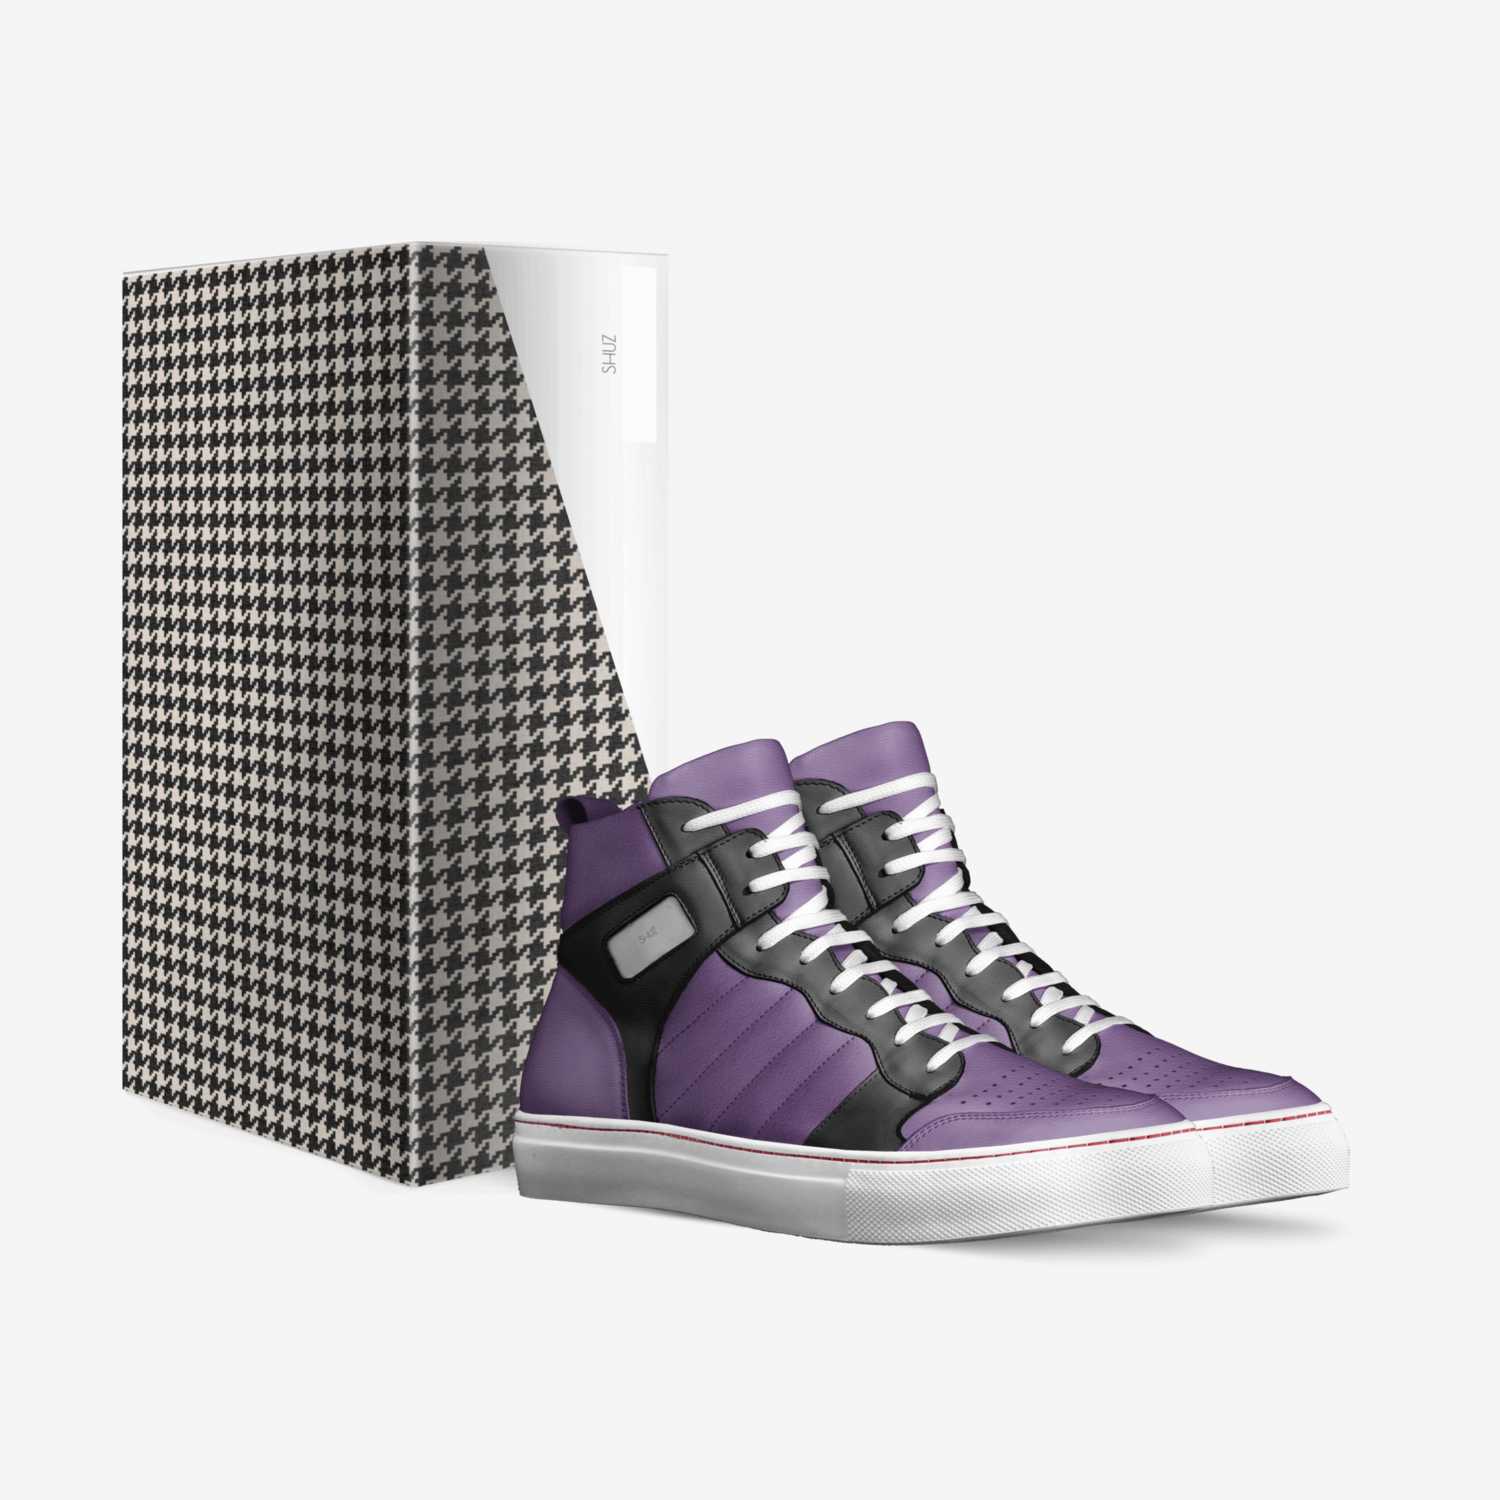 Shuz custom made in Italy shoes by Bob Zul | Box view